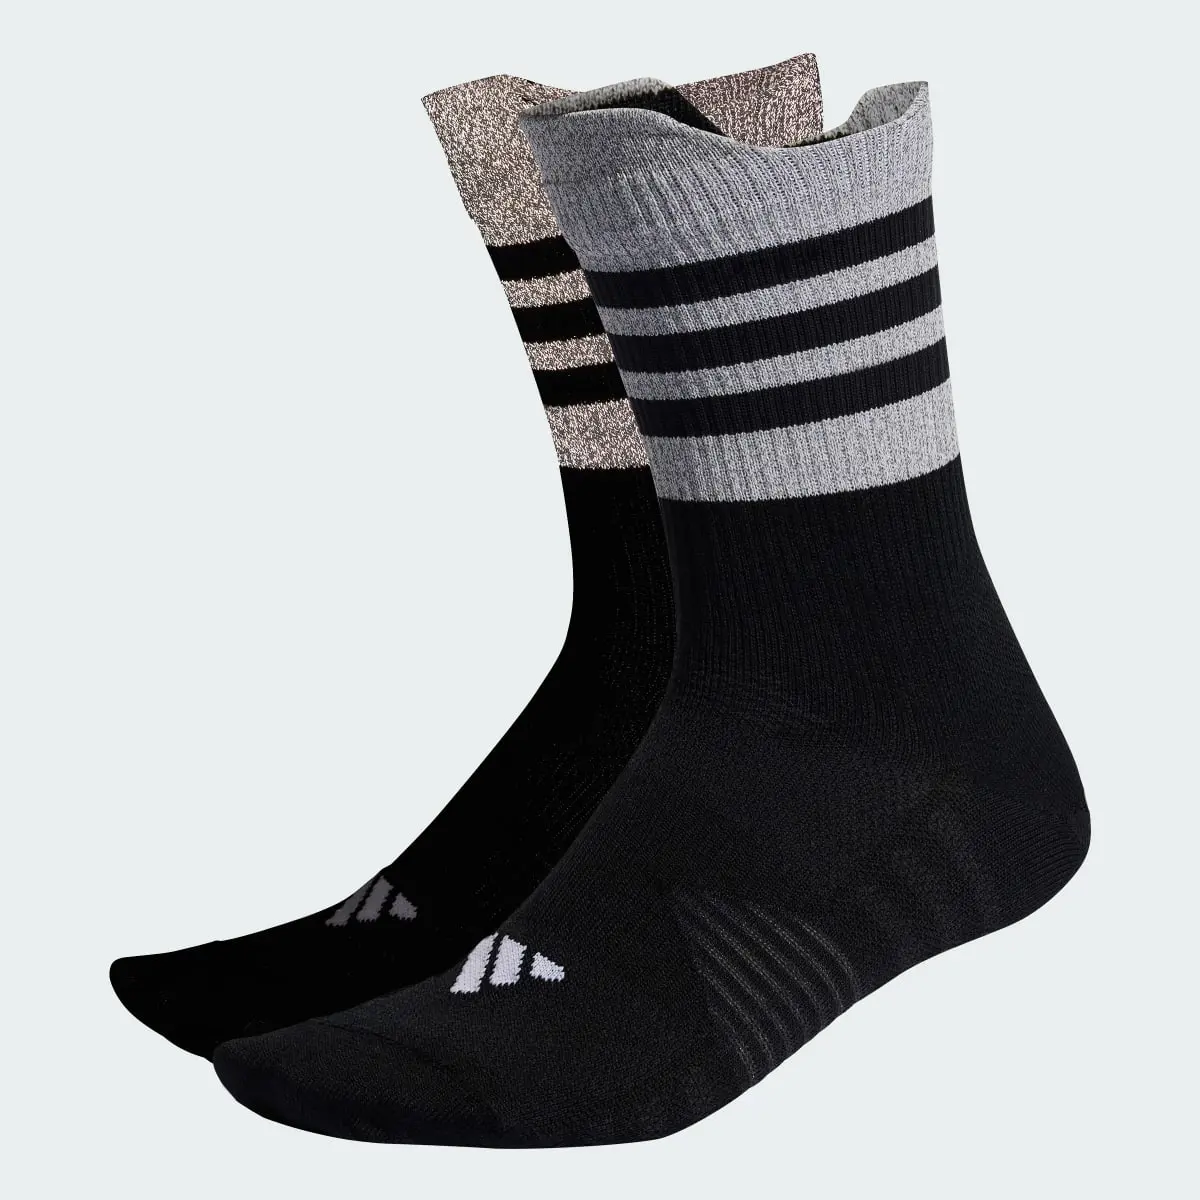 Adidas Running x Reflective Socks 1 Pair. 1